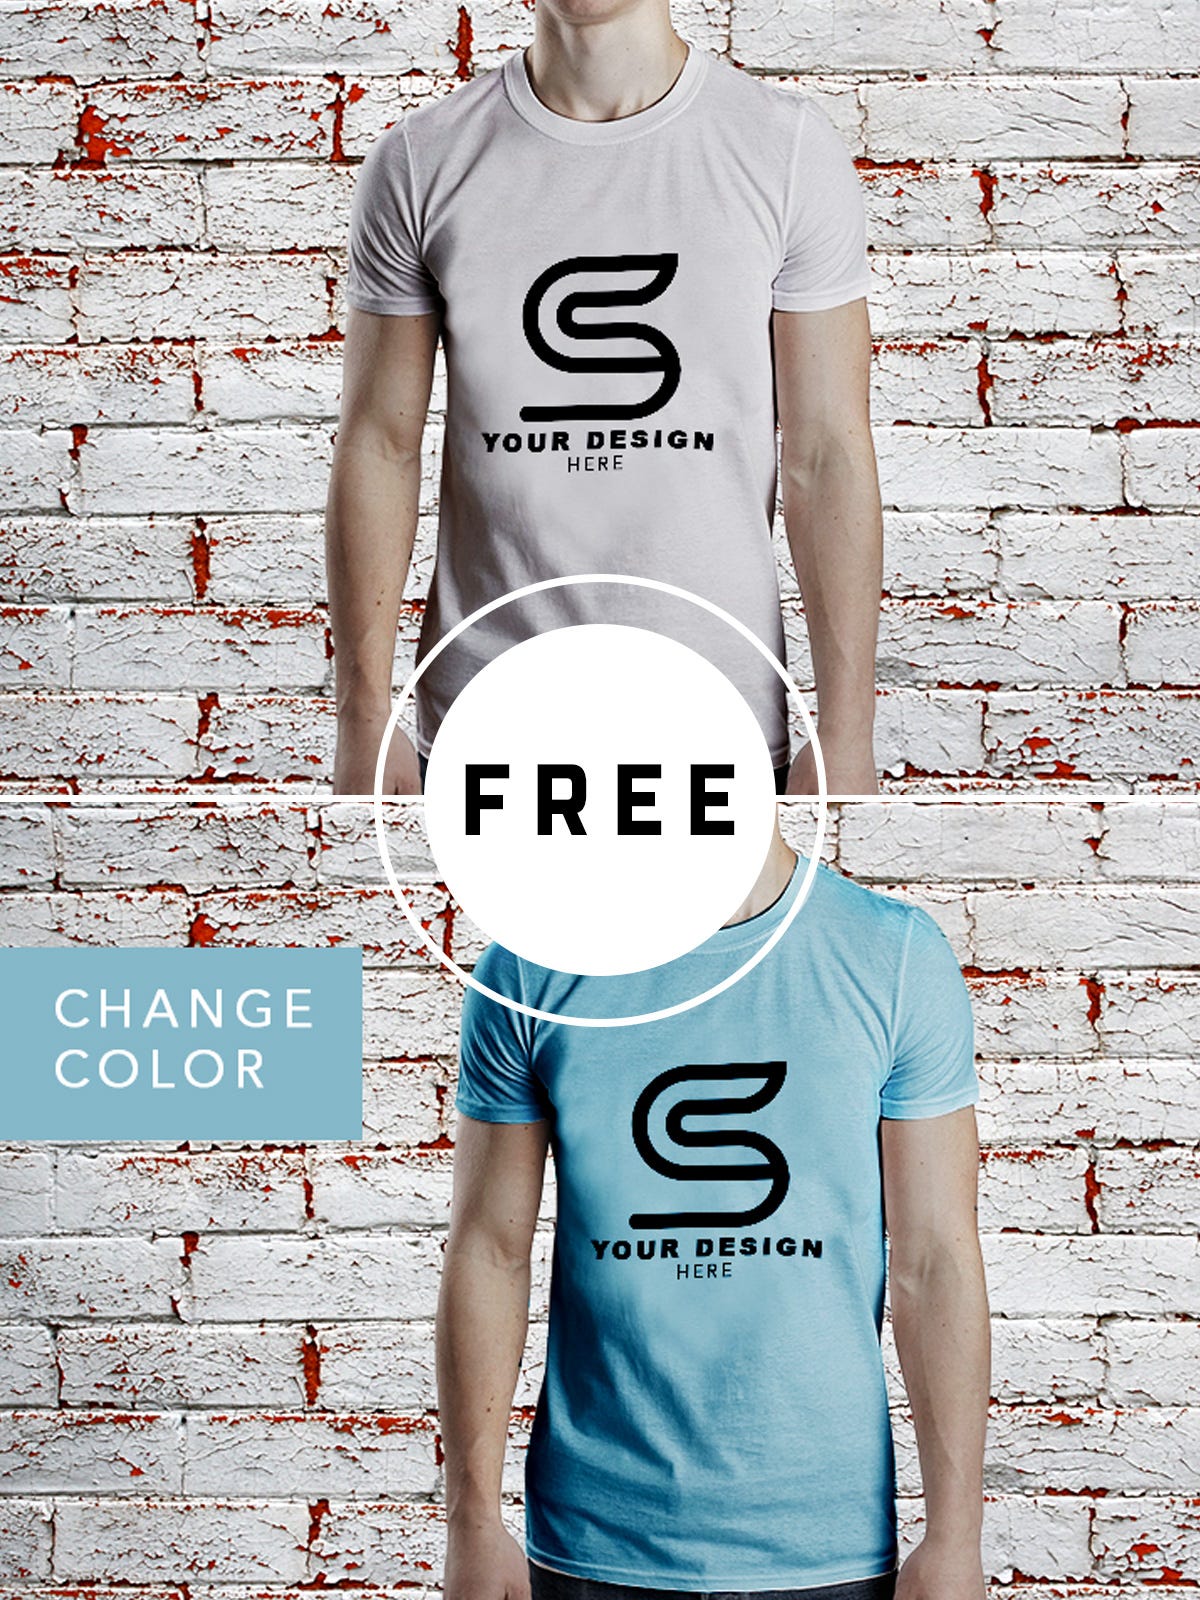 Download 25 Multipurpose Free T-Shirt Mockups For Your Breathtaking ...